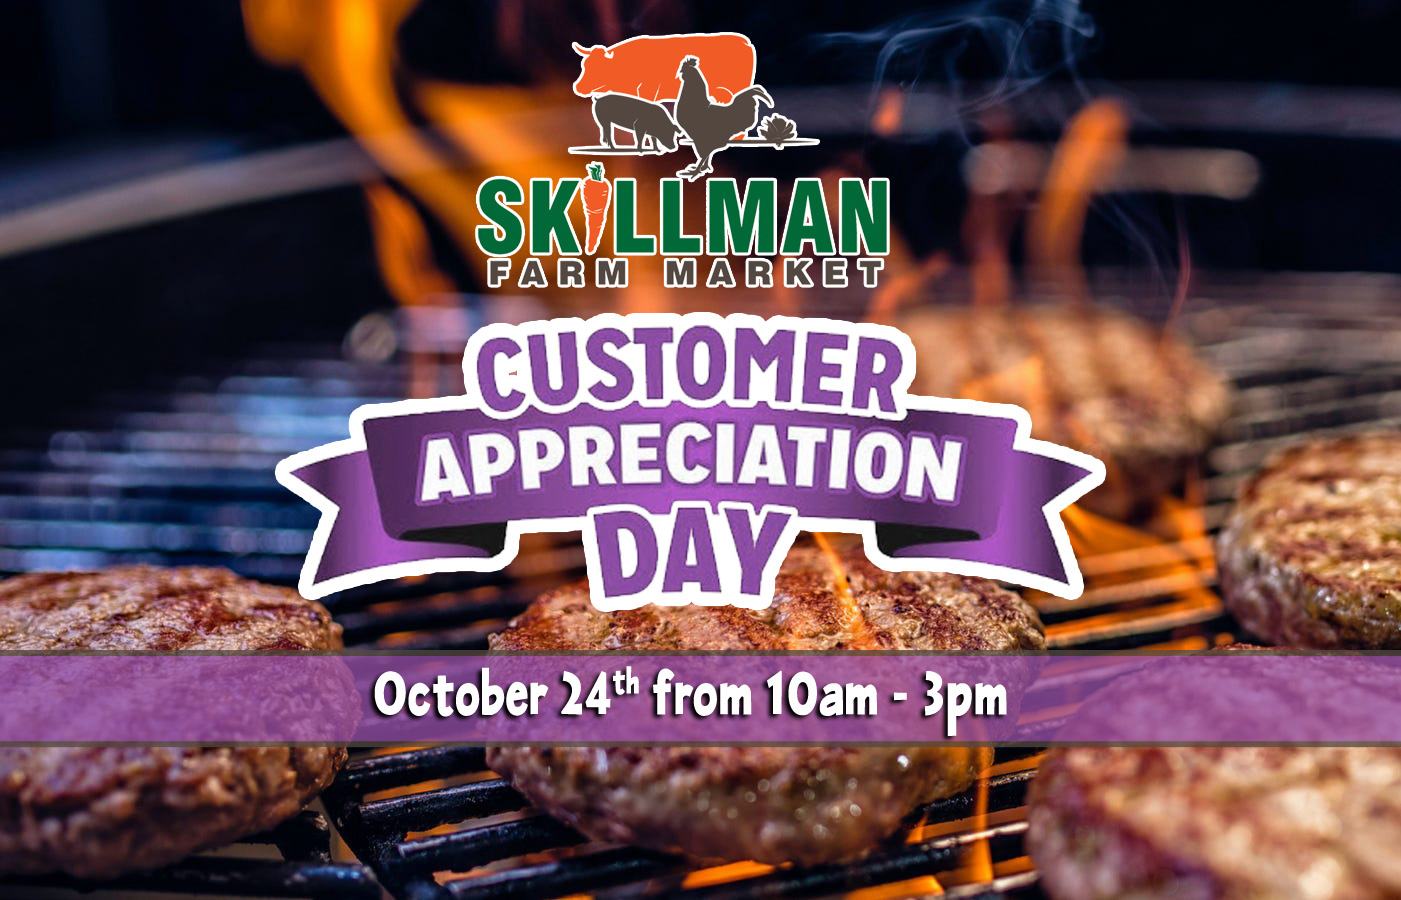 Customer Appreciation Day at Skillman Farm Market and Butcher Shop will be Saturday, October 24, 2020